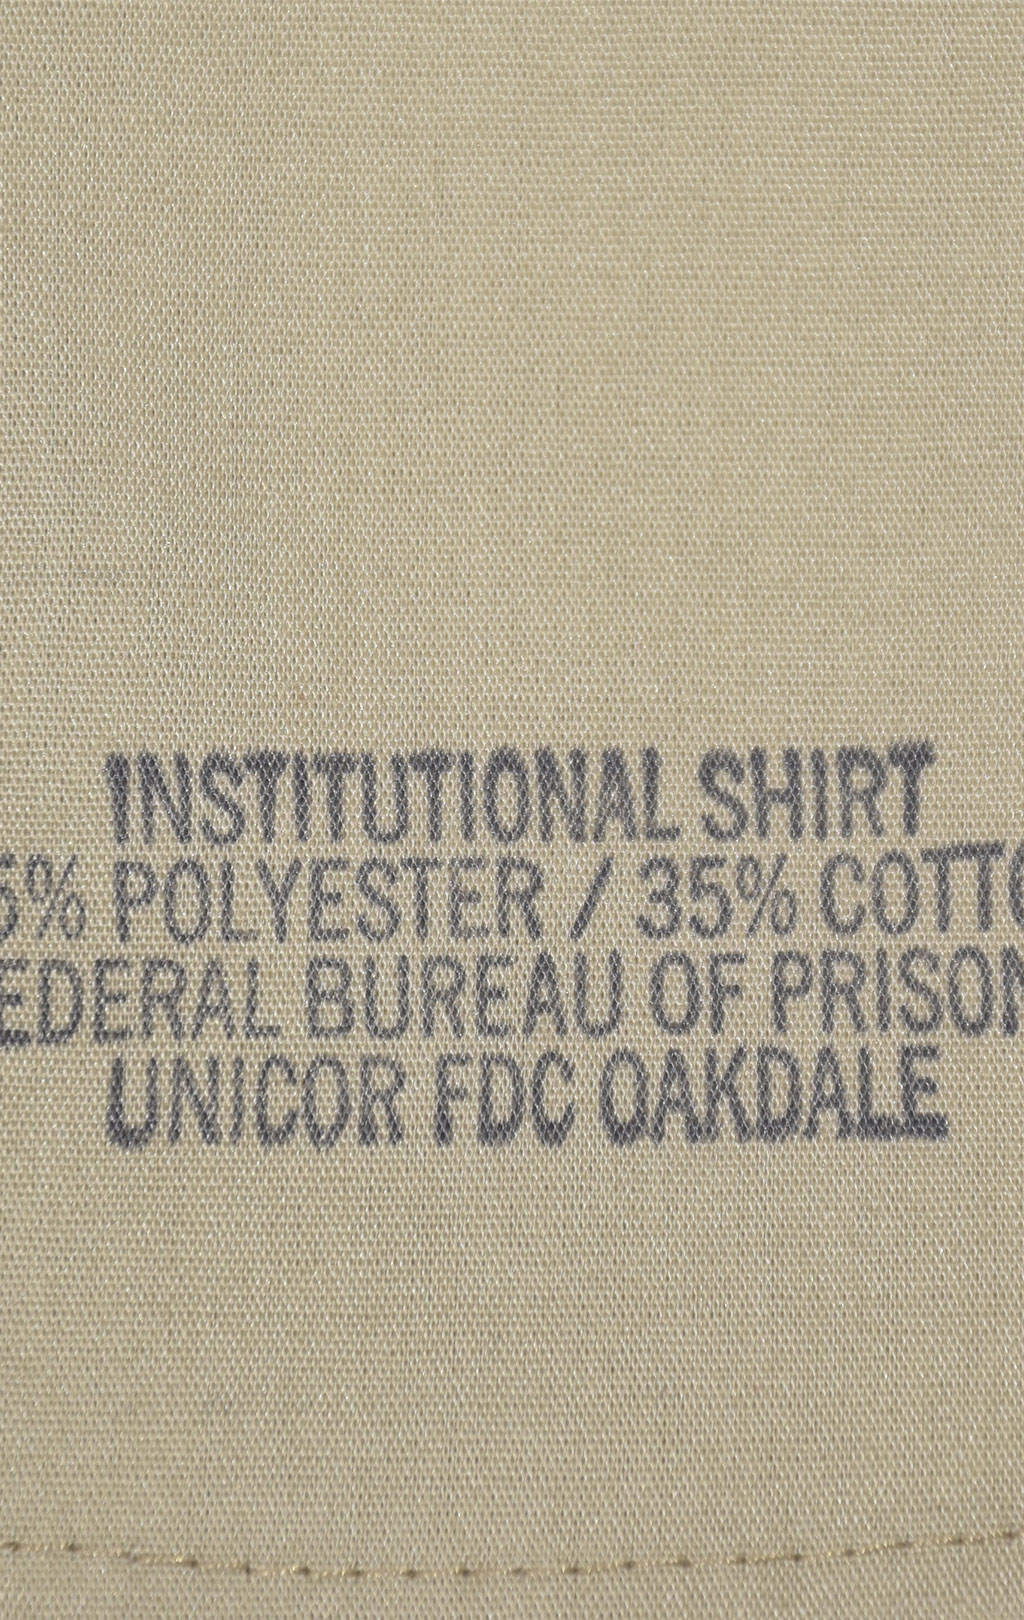 Рубашка Institution Shirt khaki США